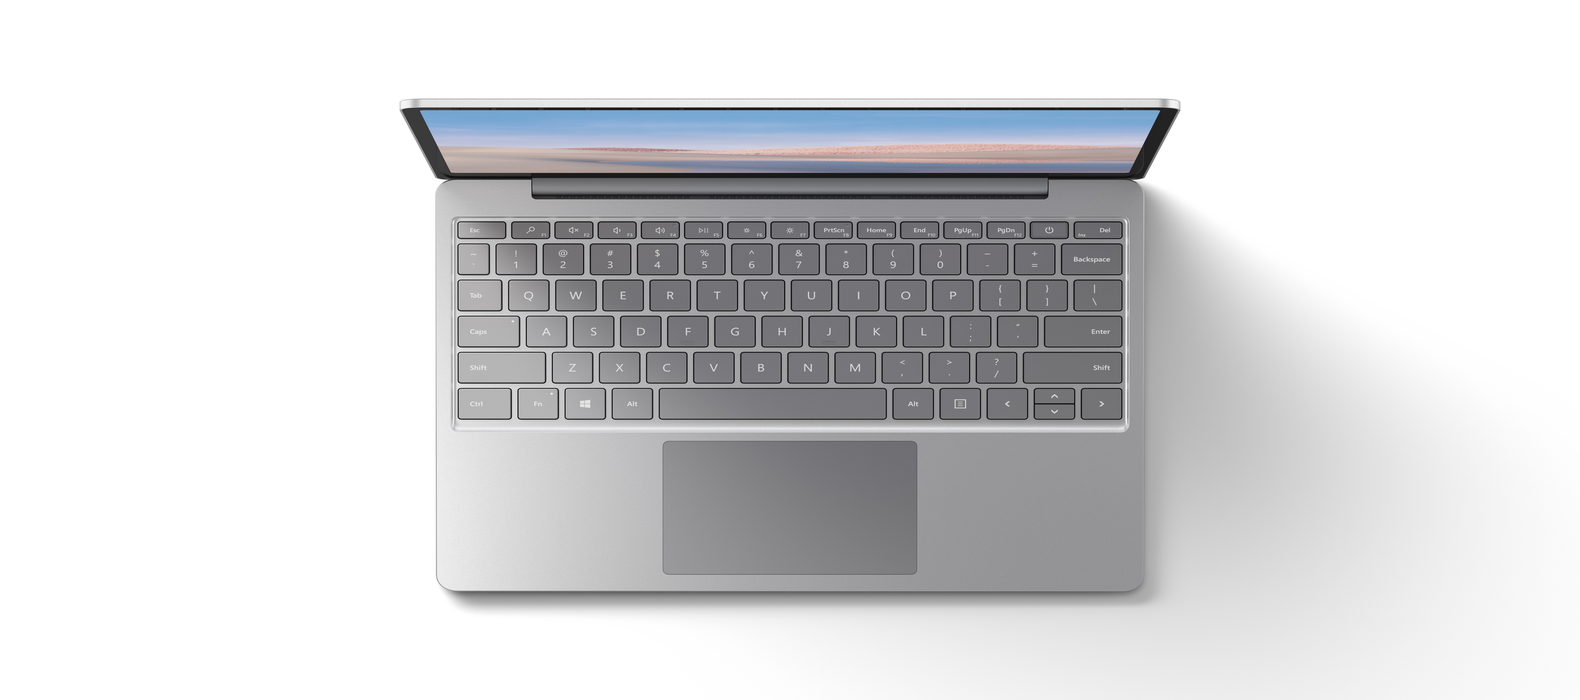 Microsoft Surface Laptop Go, 12.4" Touchscreen, Intel Core i5-1035G1, 8GB Memory, 128GB SSD, Platinum, THH-00001